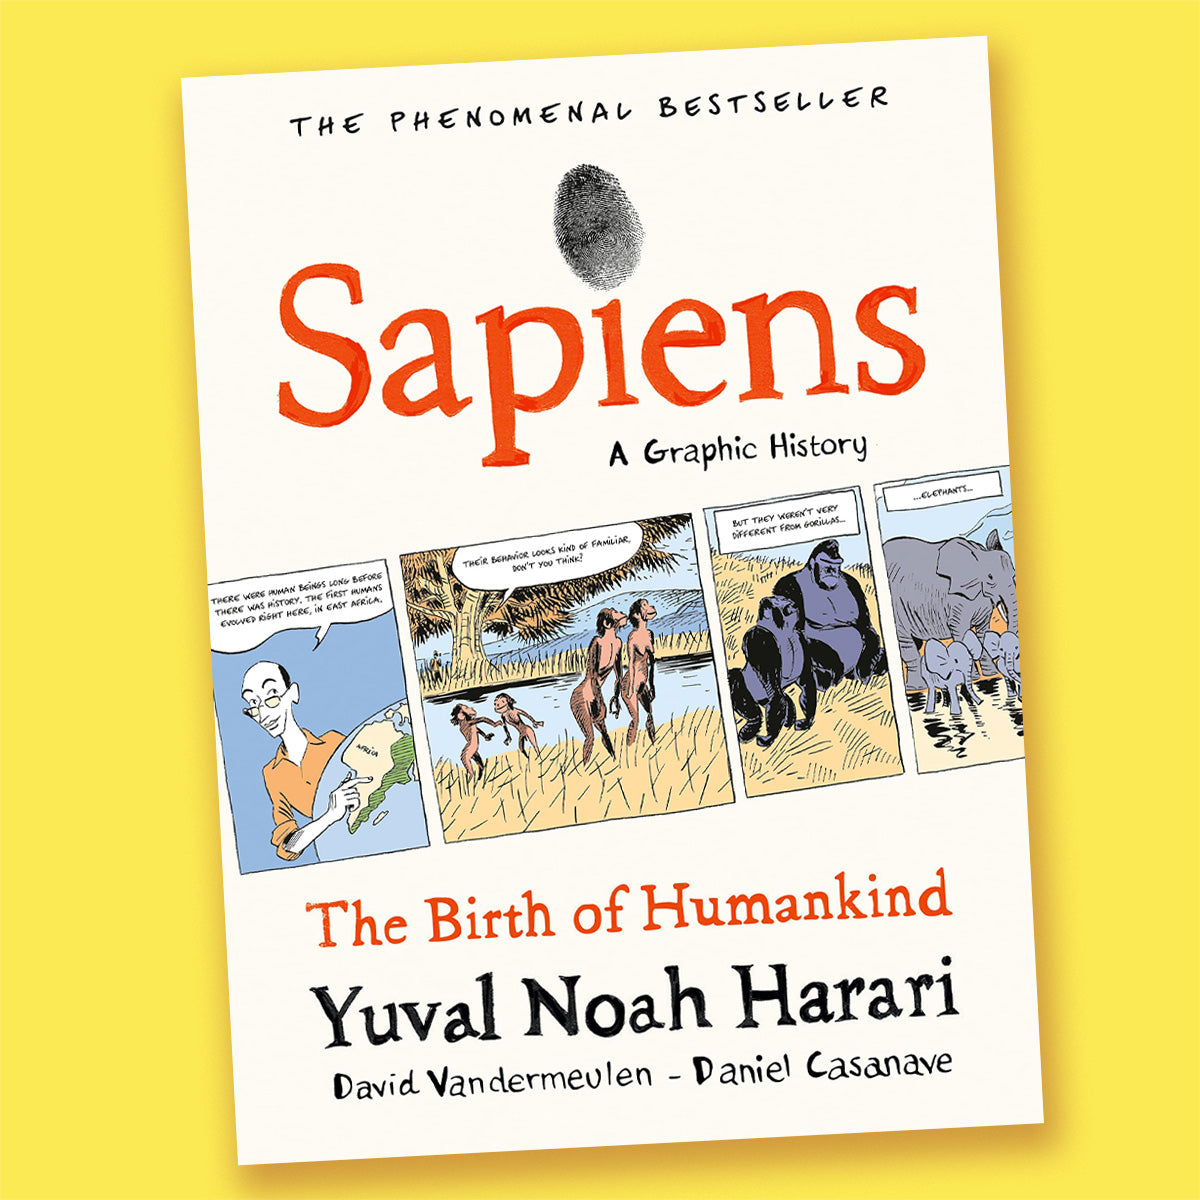 Sapiens: A Graphic History, Volume 1: The Birth of Humankind by Yuval Noah Harari, David Vandermeulen, et al.